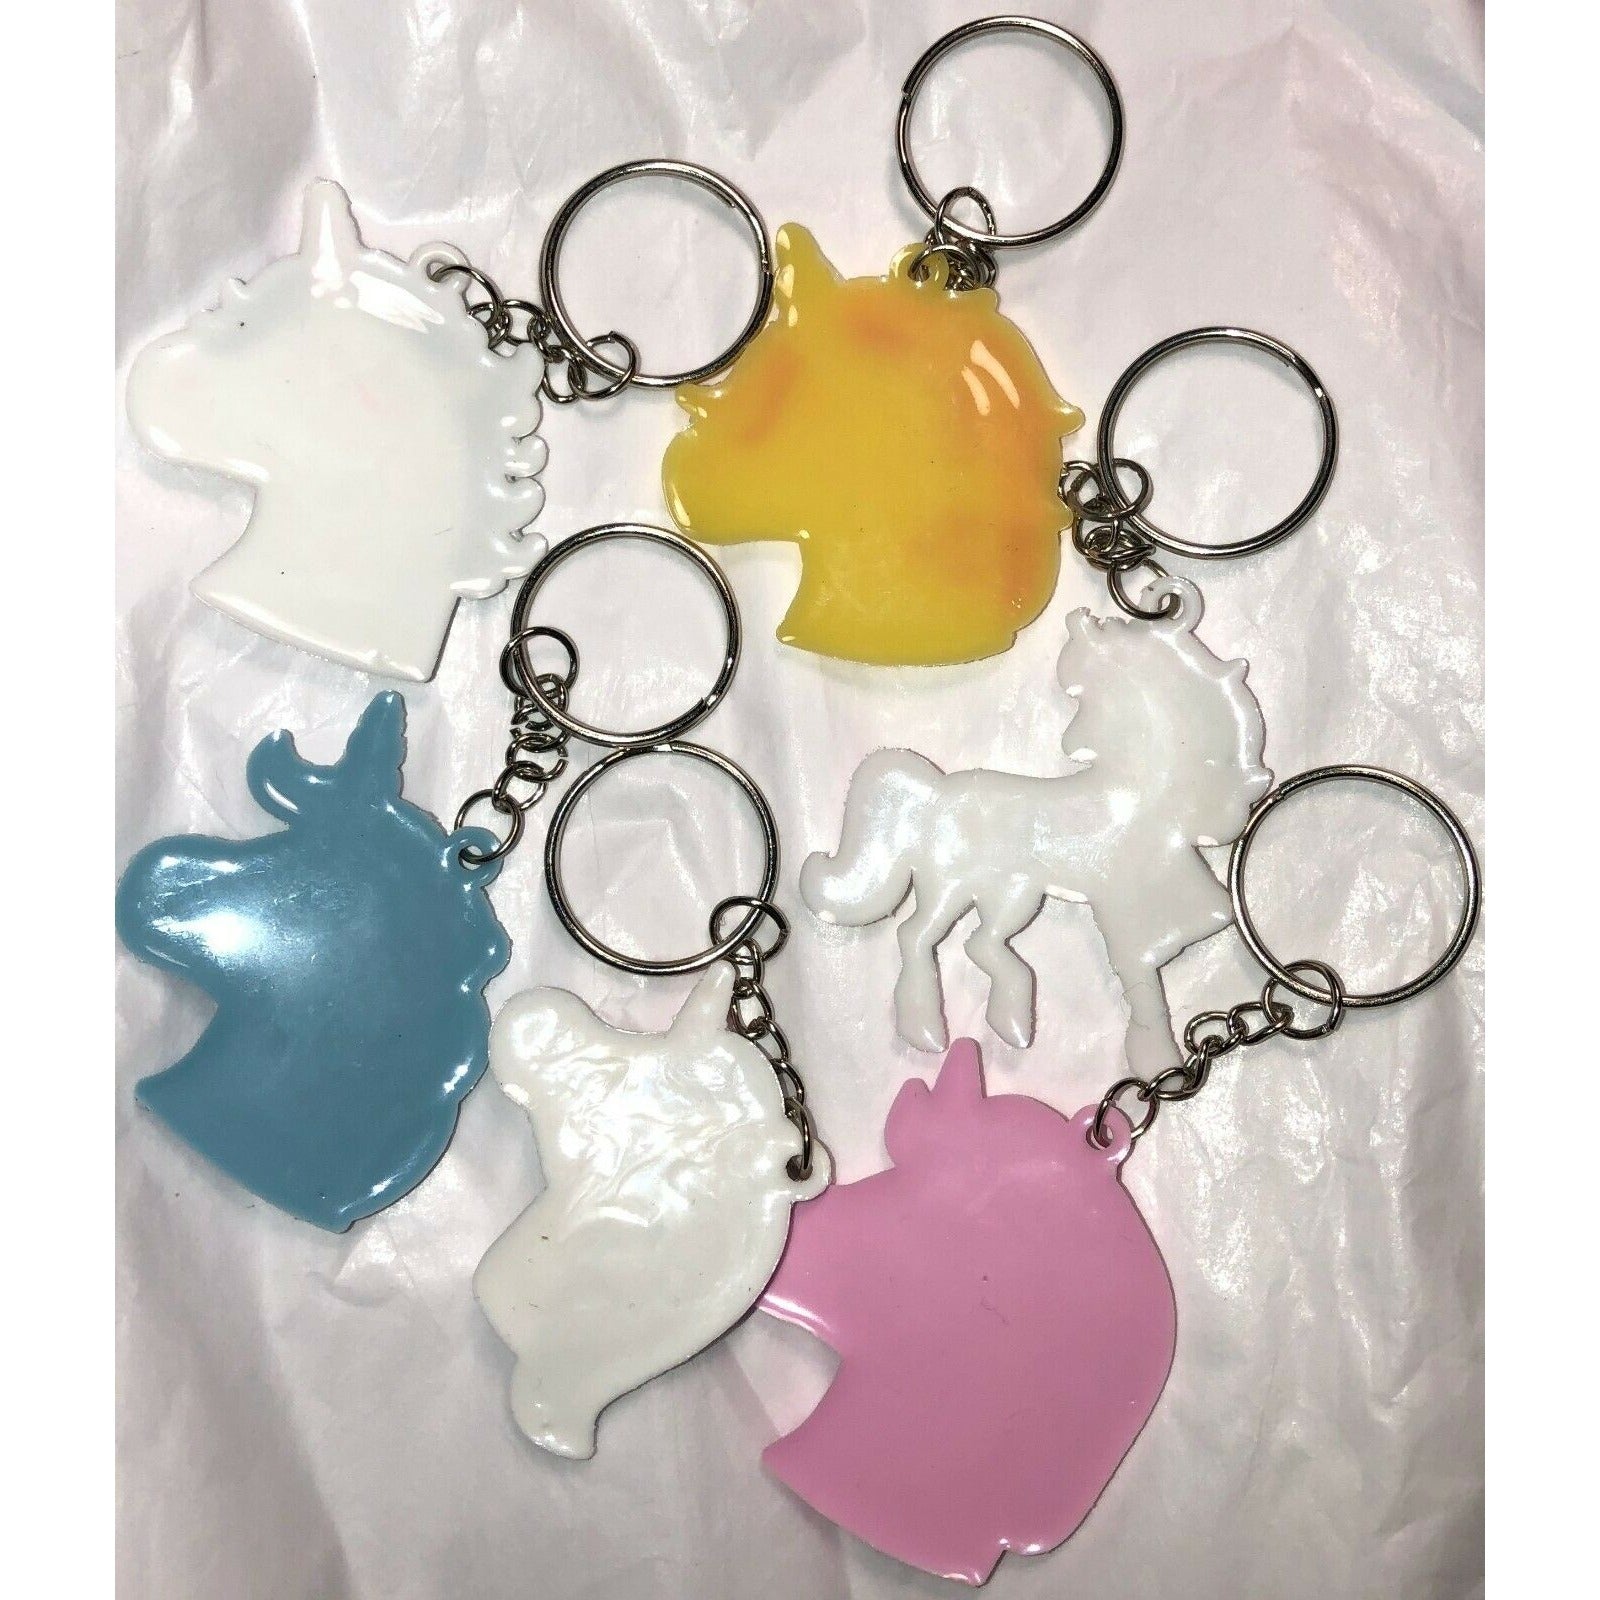 OHill Lot of 6 Rainbow Unicorn Key Chains Key Ring - Variety Sales Etc.